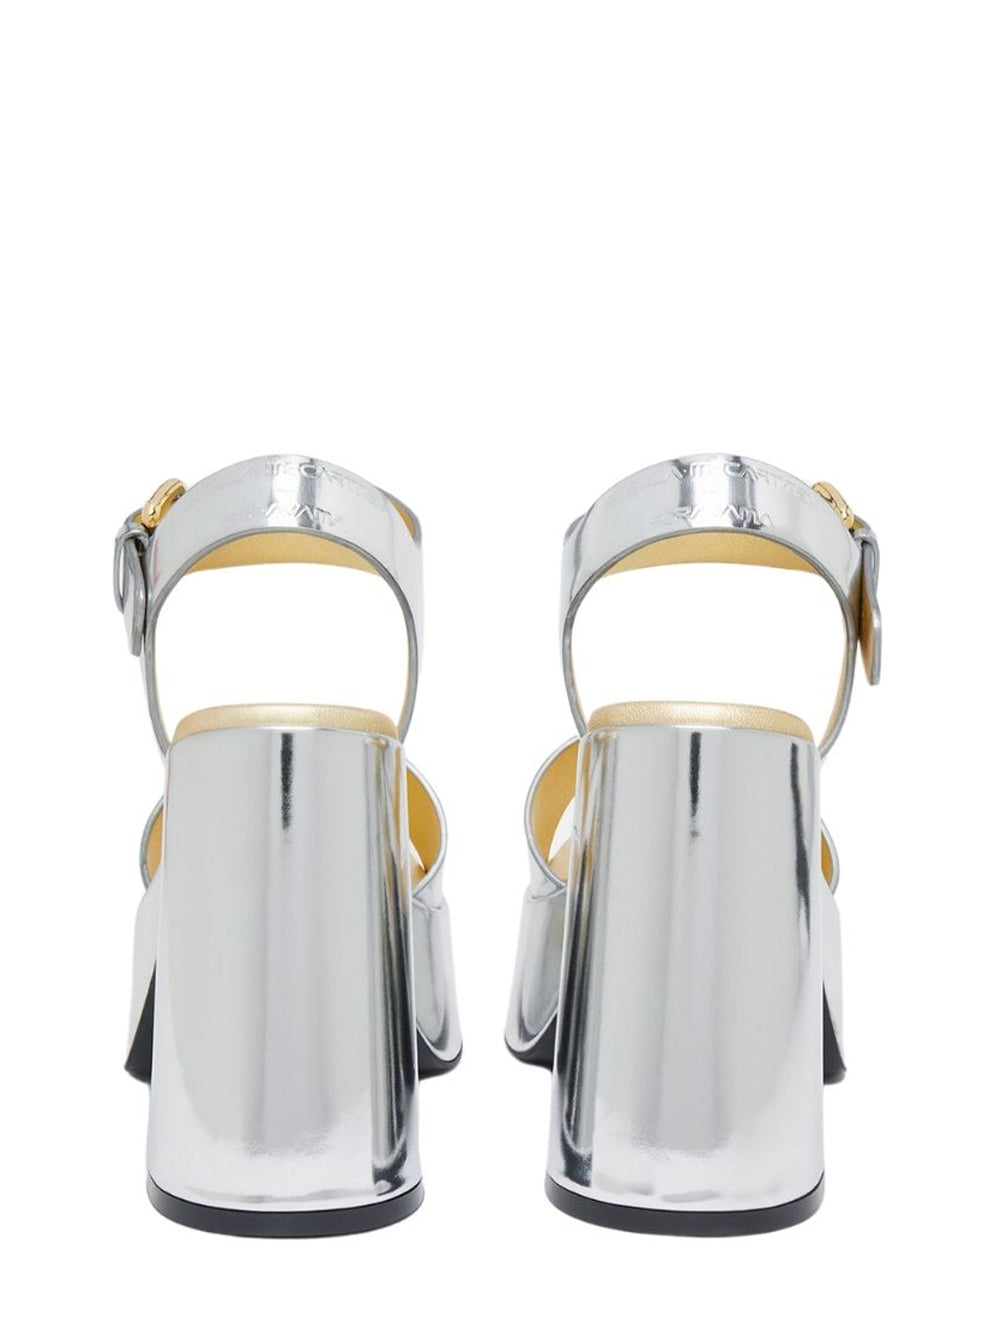 Skyla Mirror Shoes (Silver)